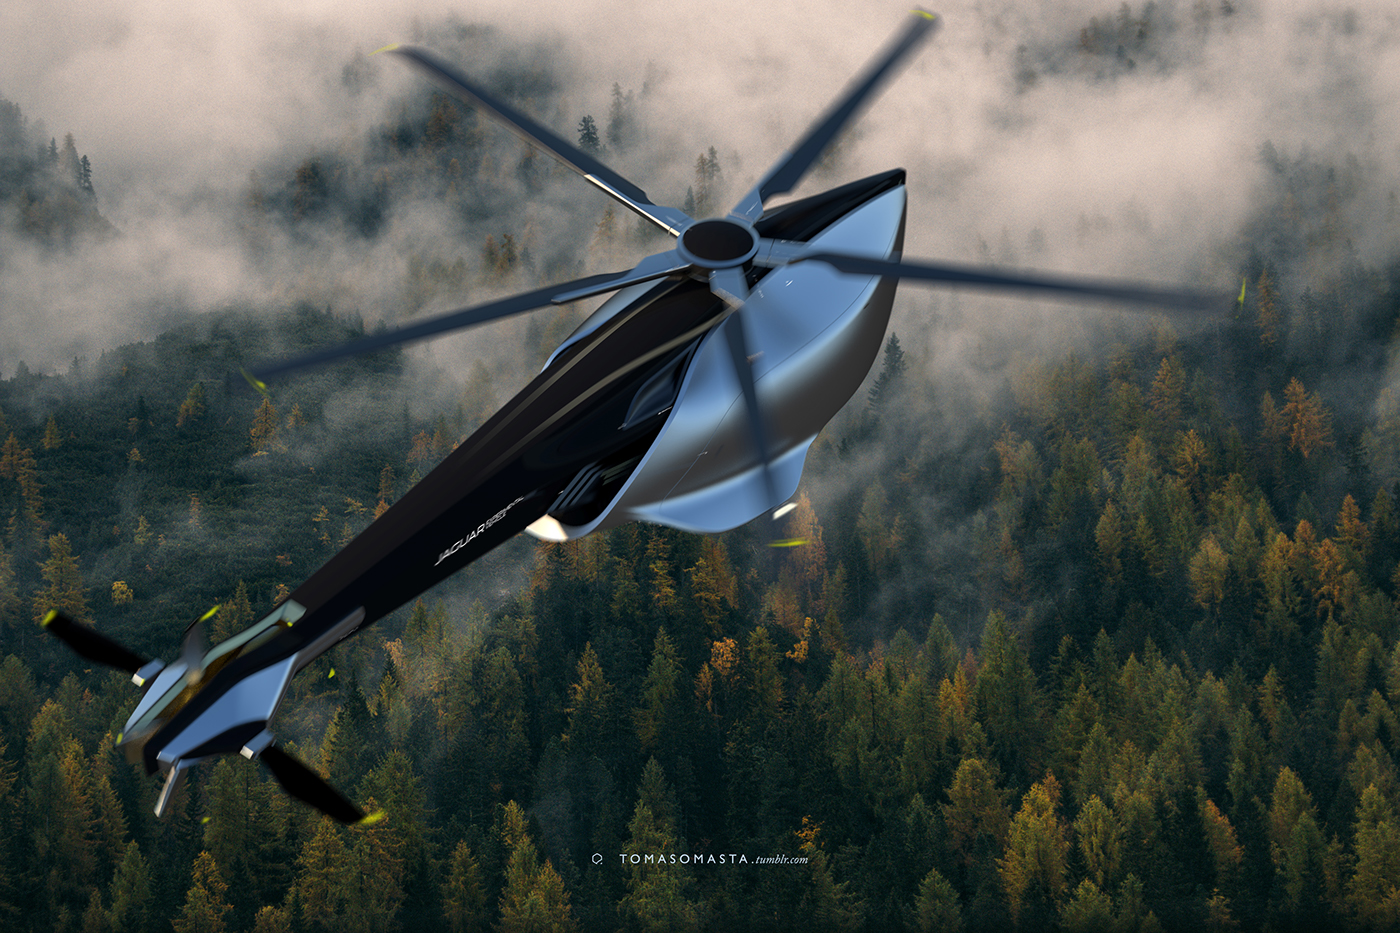 jaguar volanti helicopter concept Coventry model chopper